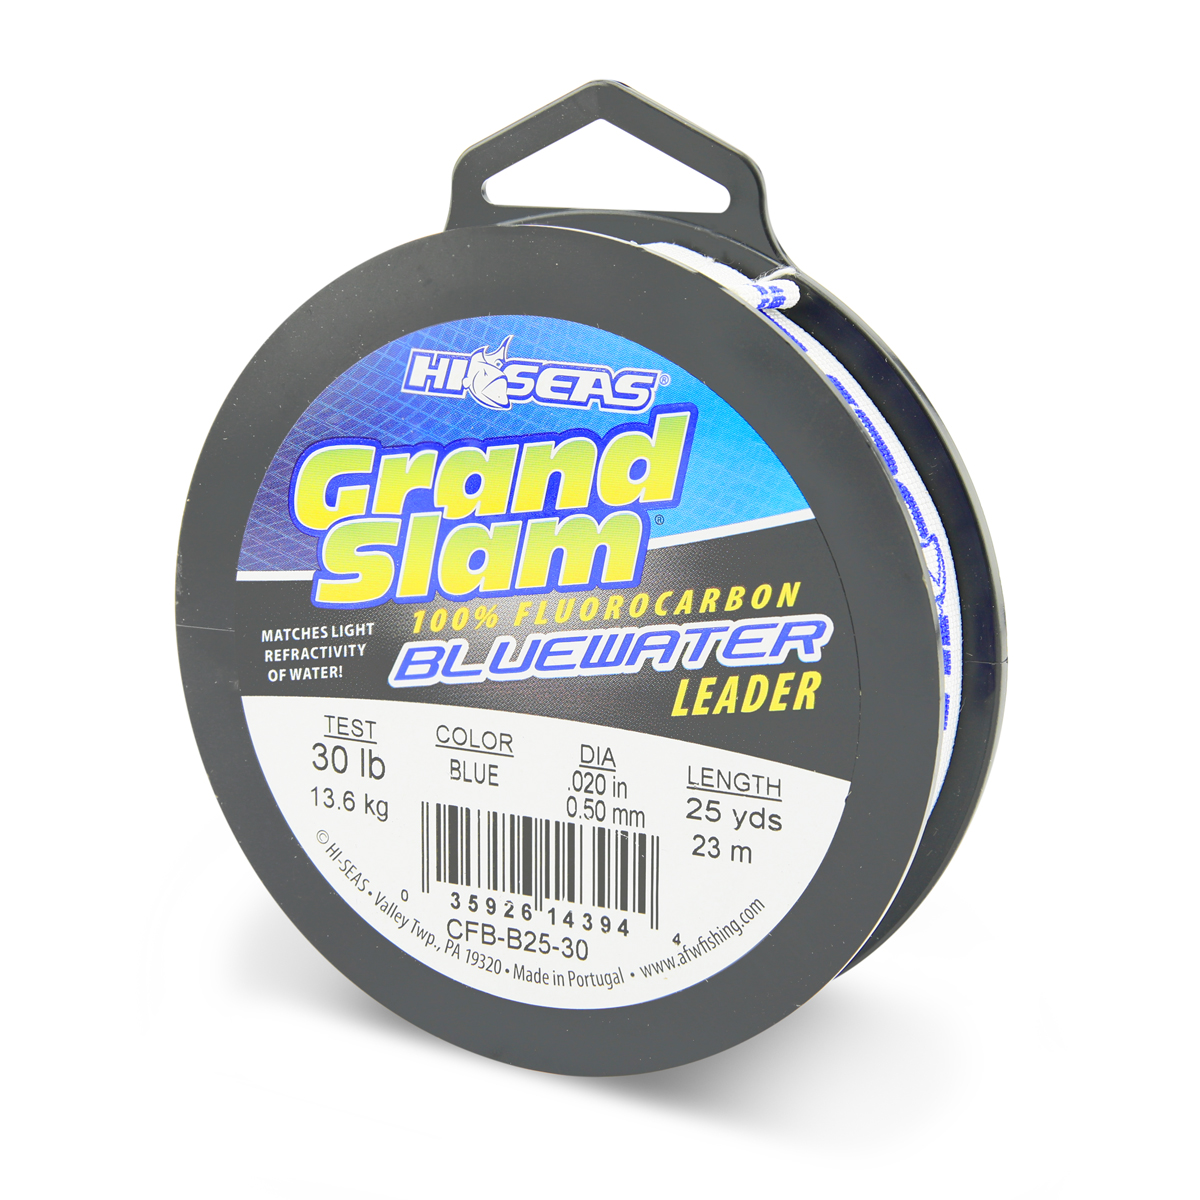 Grand Slam Bluewater 100% Fluorocarbon Leader, 30 lb (13.6 kg